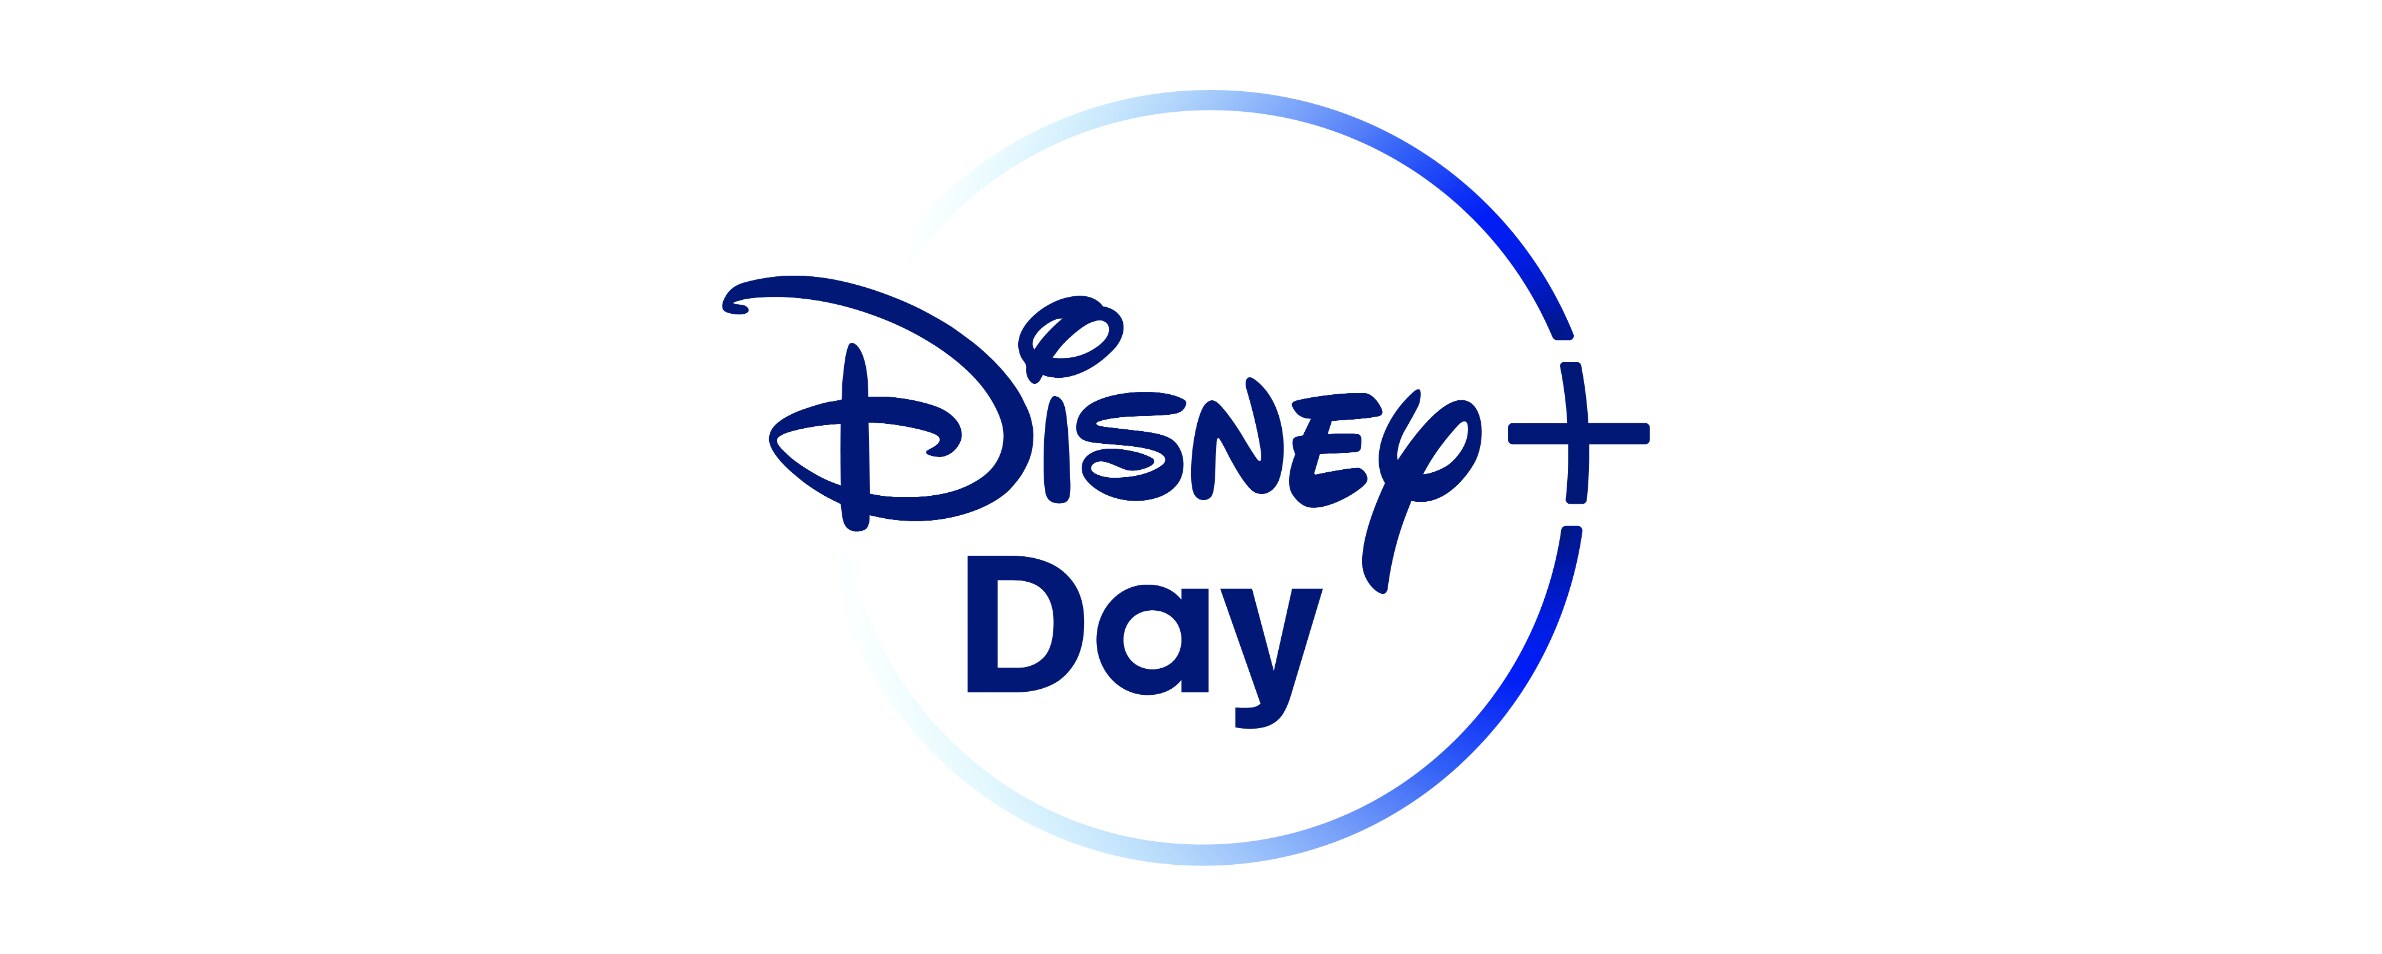 Disney+ Day Logo